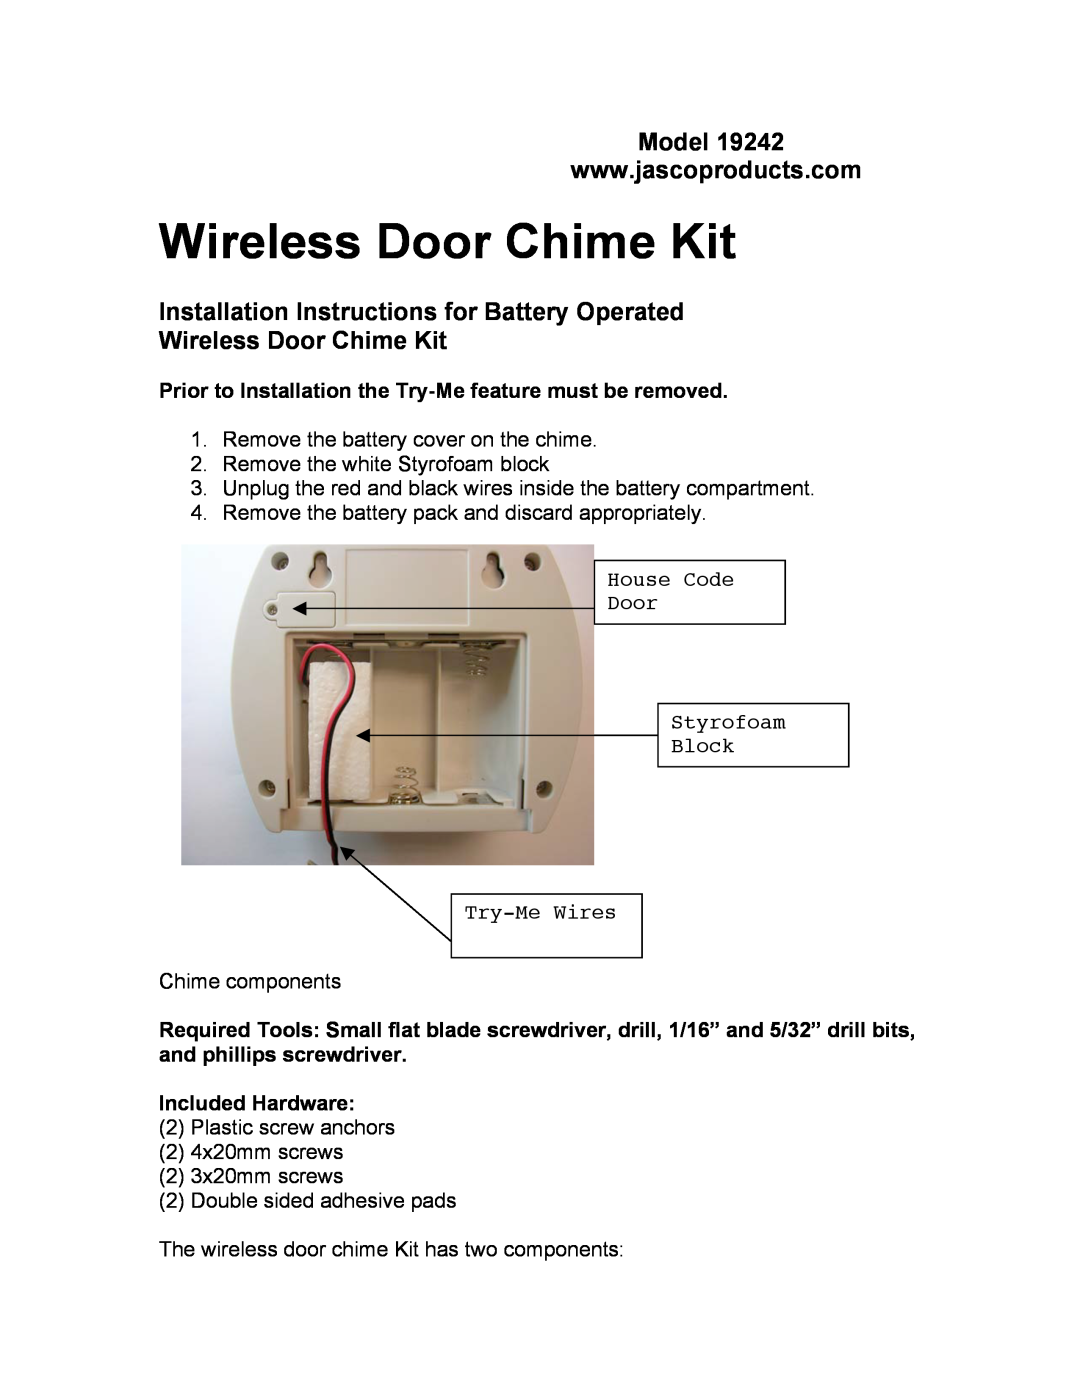 Jasco 19242 installation instructions Wireless Door Chime Kit, Installation Instructions for Battery Operated 